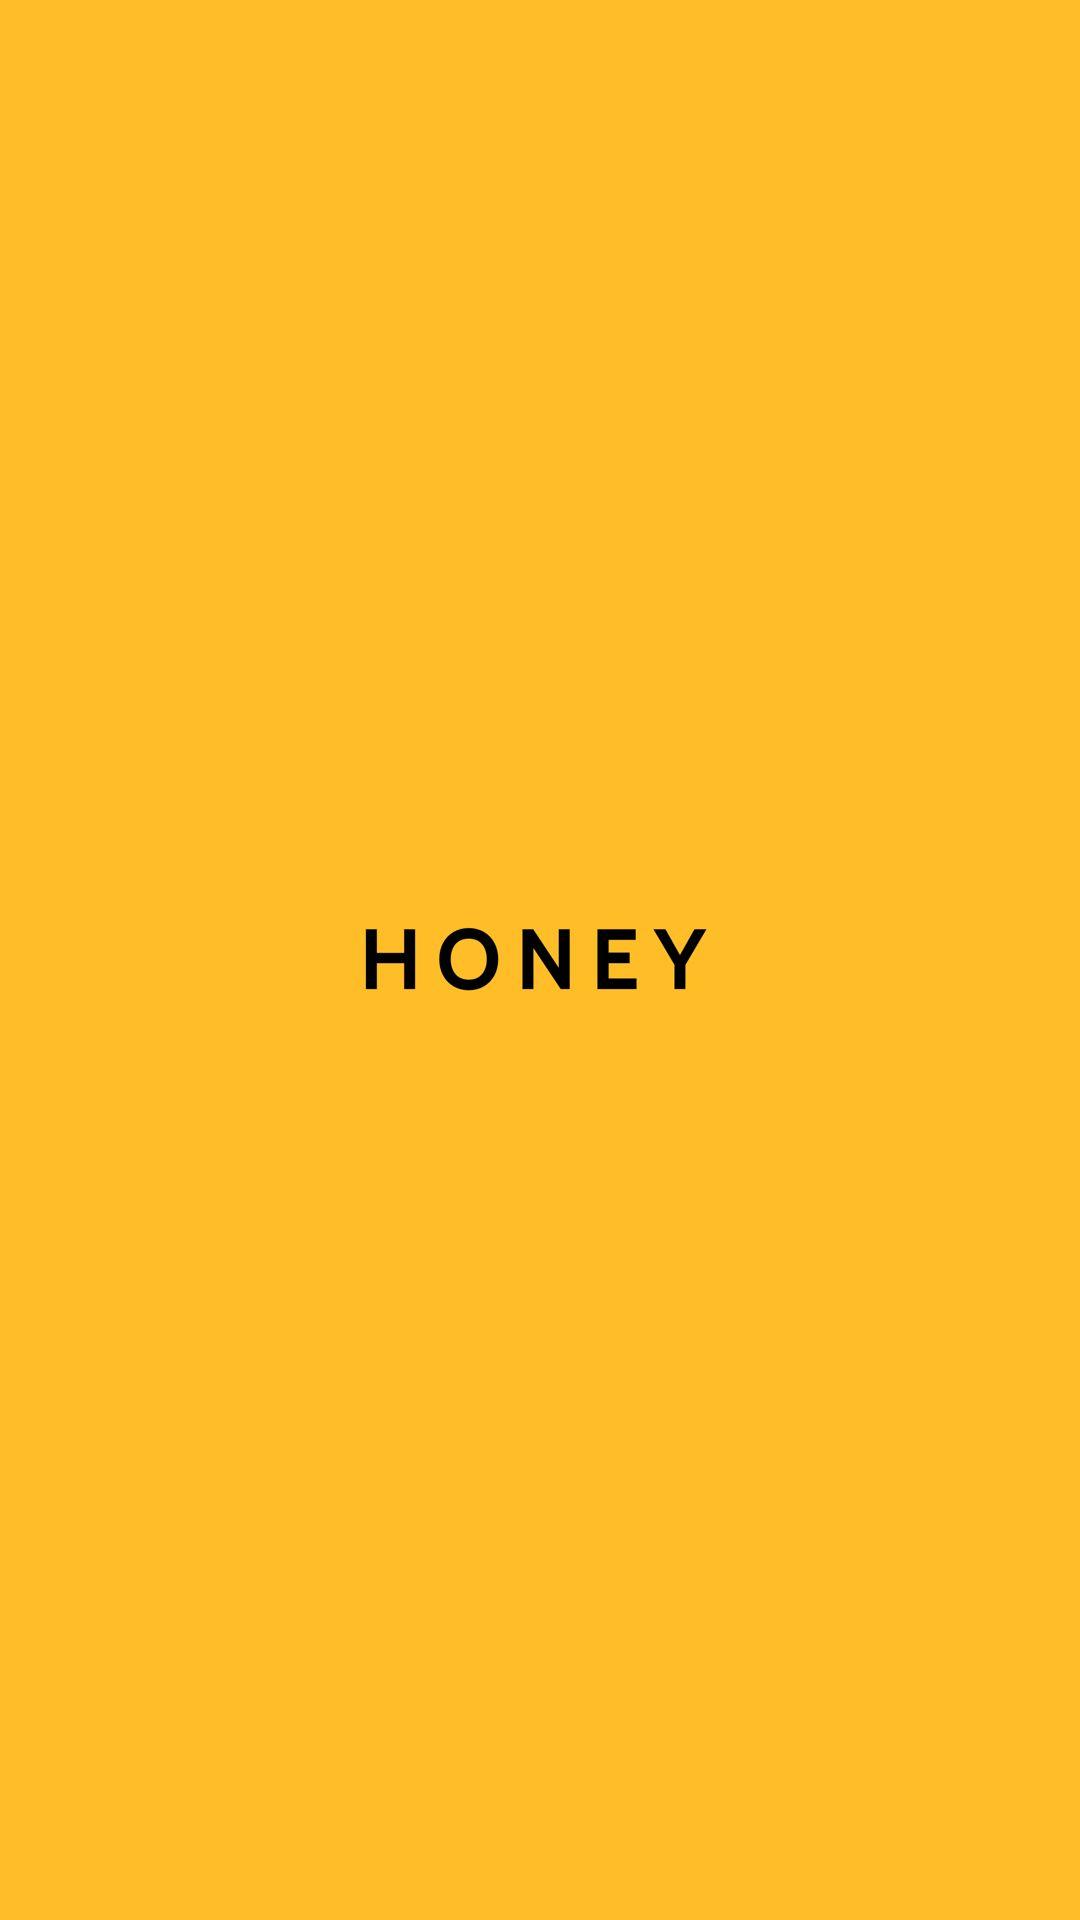 Honey Background Images  Free Download on Freepik